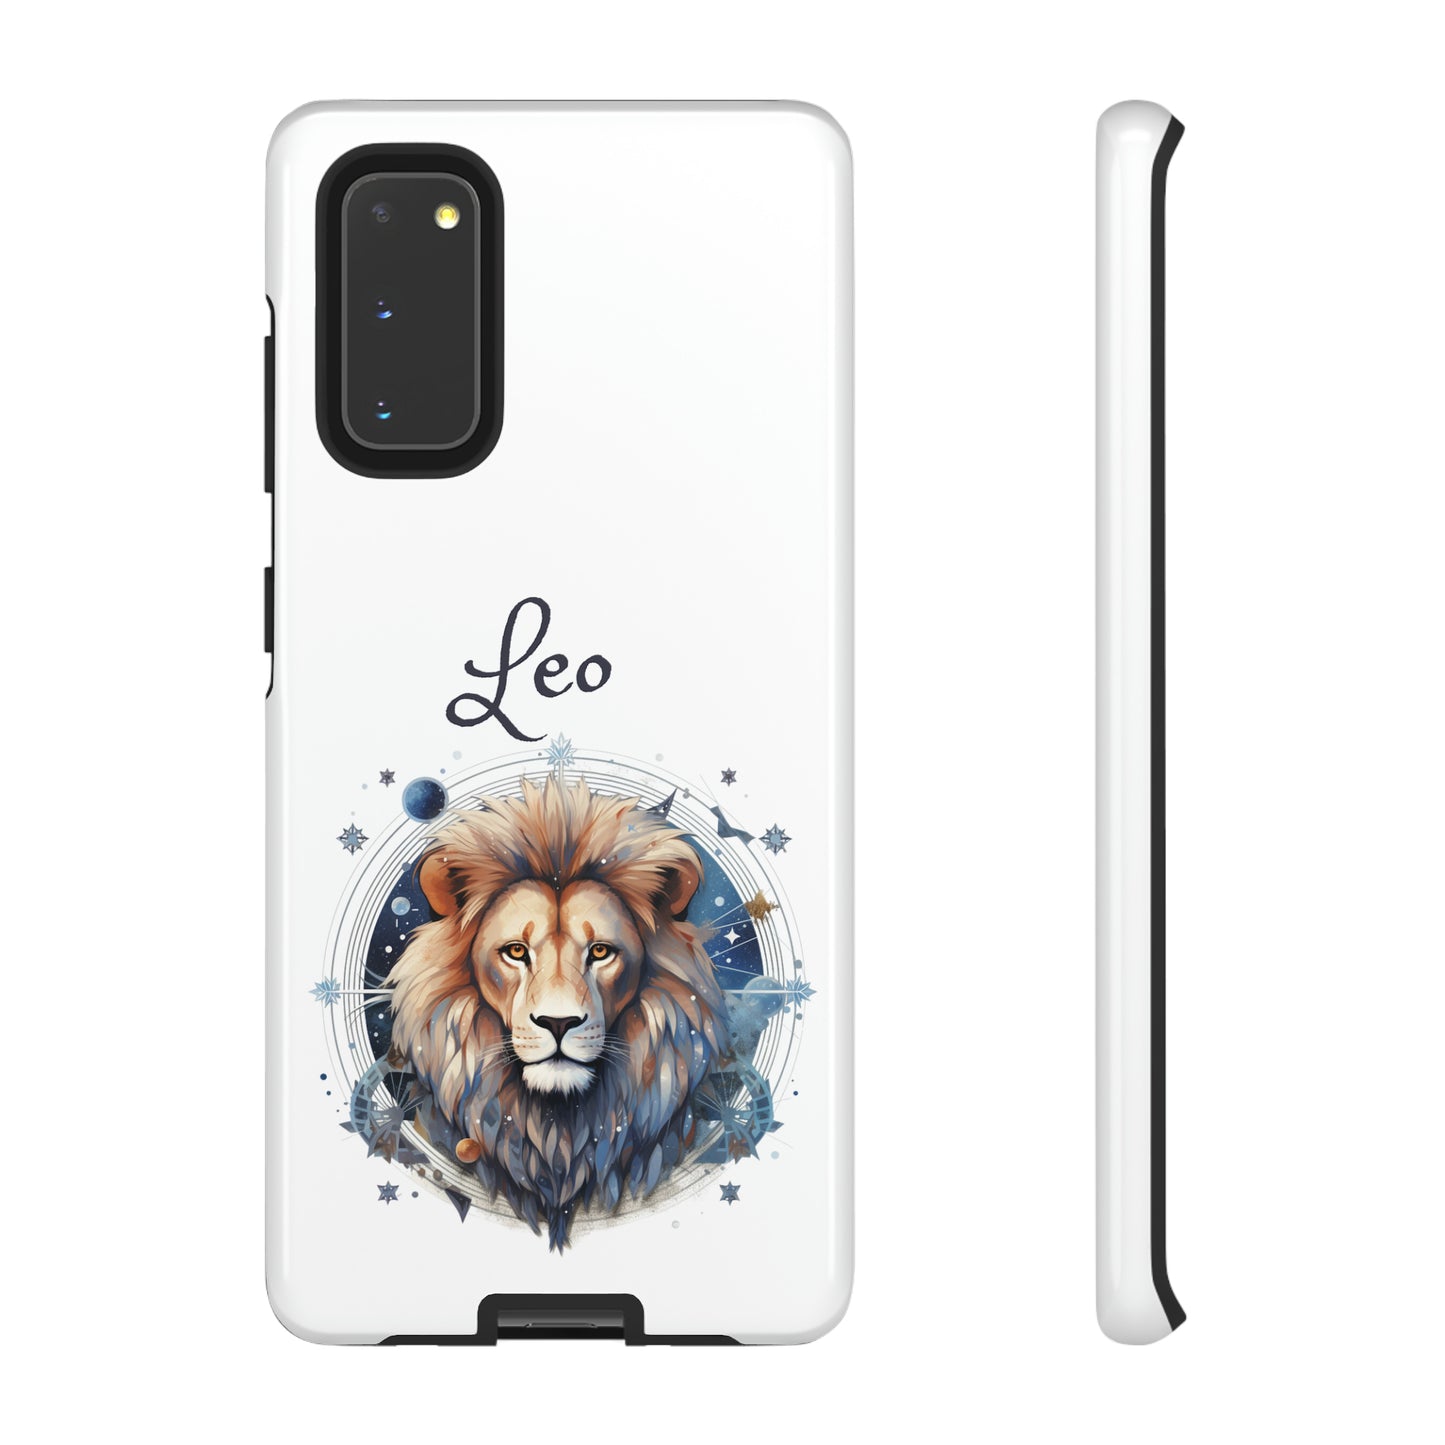 Leo Zodiac Horoscope Phone Case